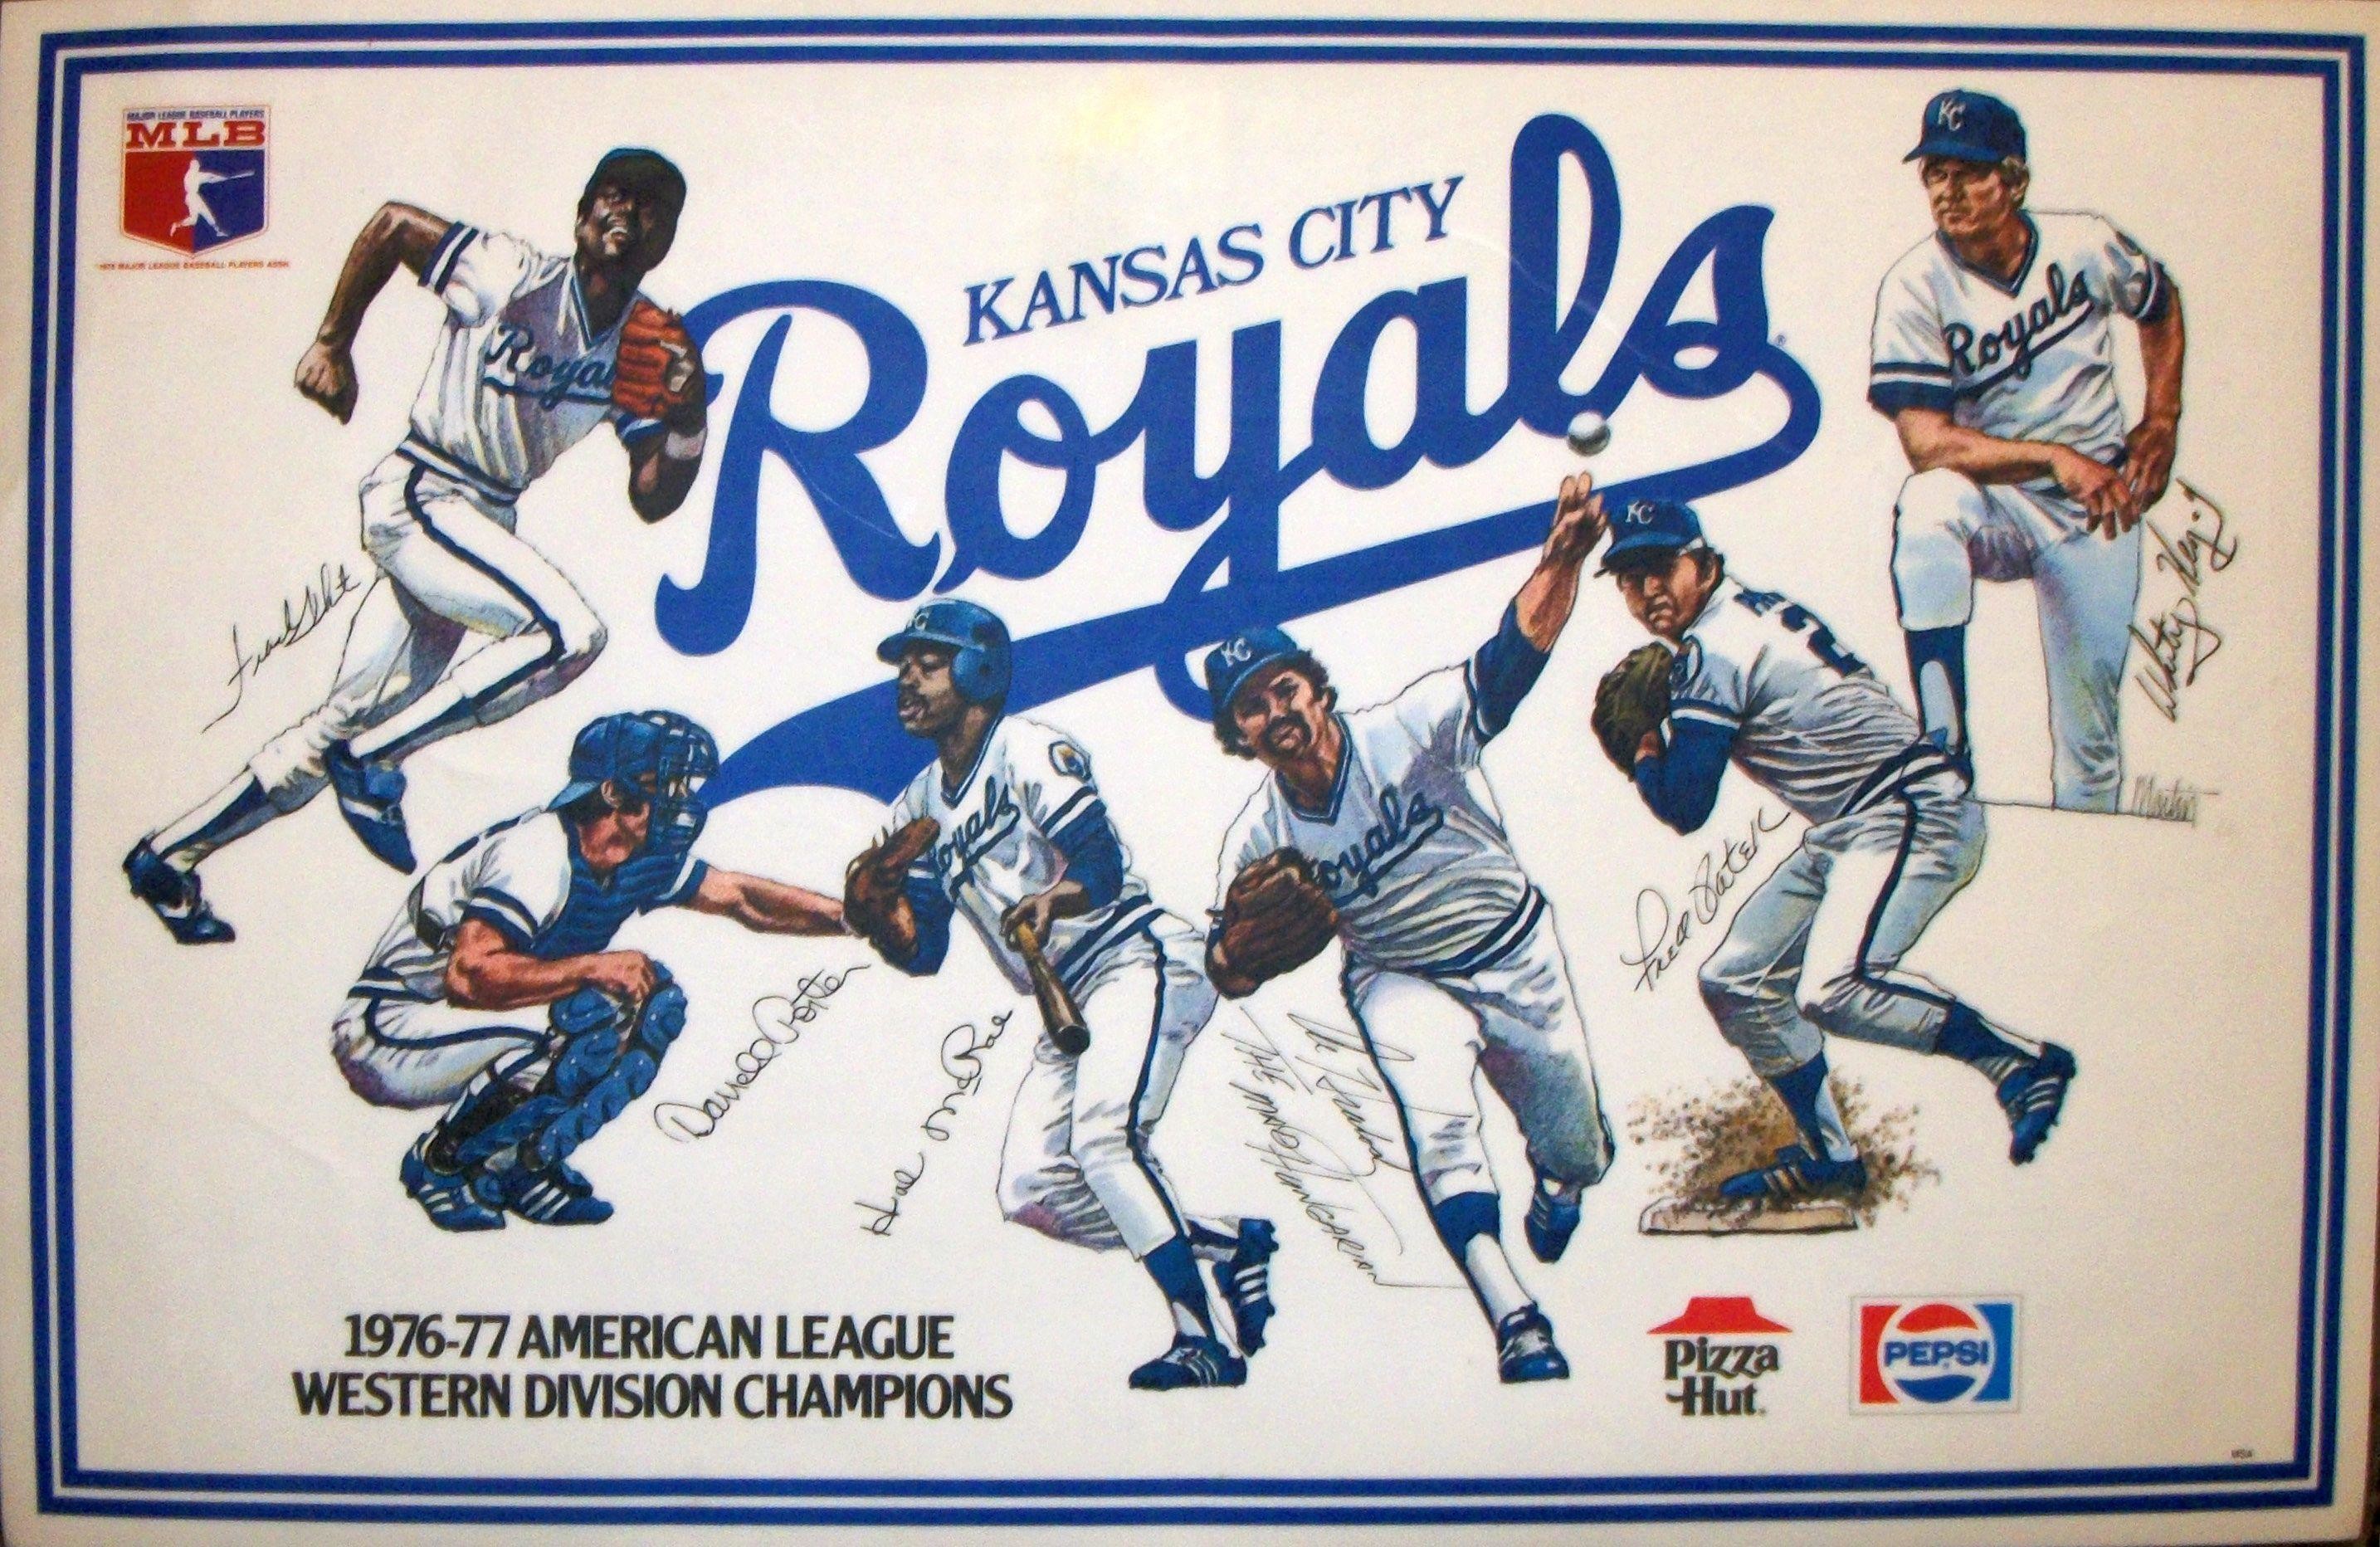 Kansas City Royals Hd Wallpaper Wallpapersafari - HD Wallpaper 